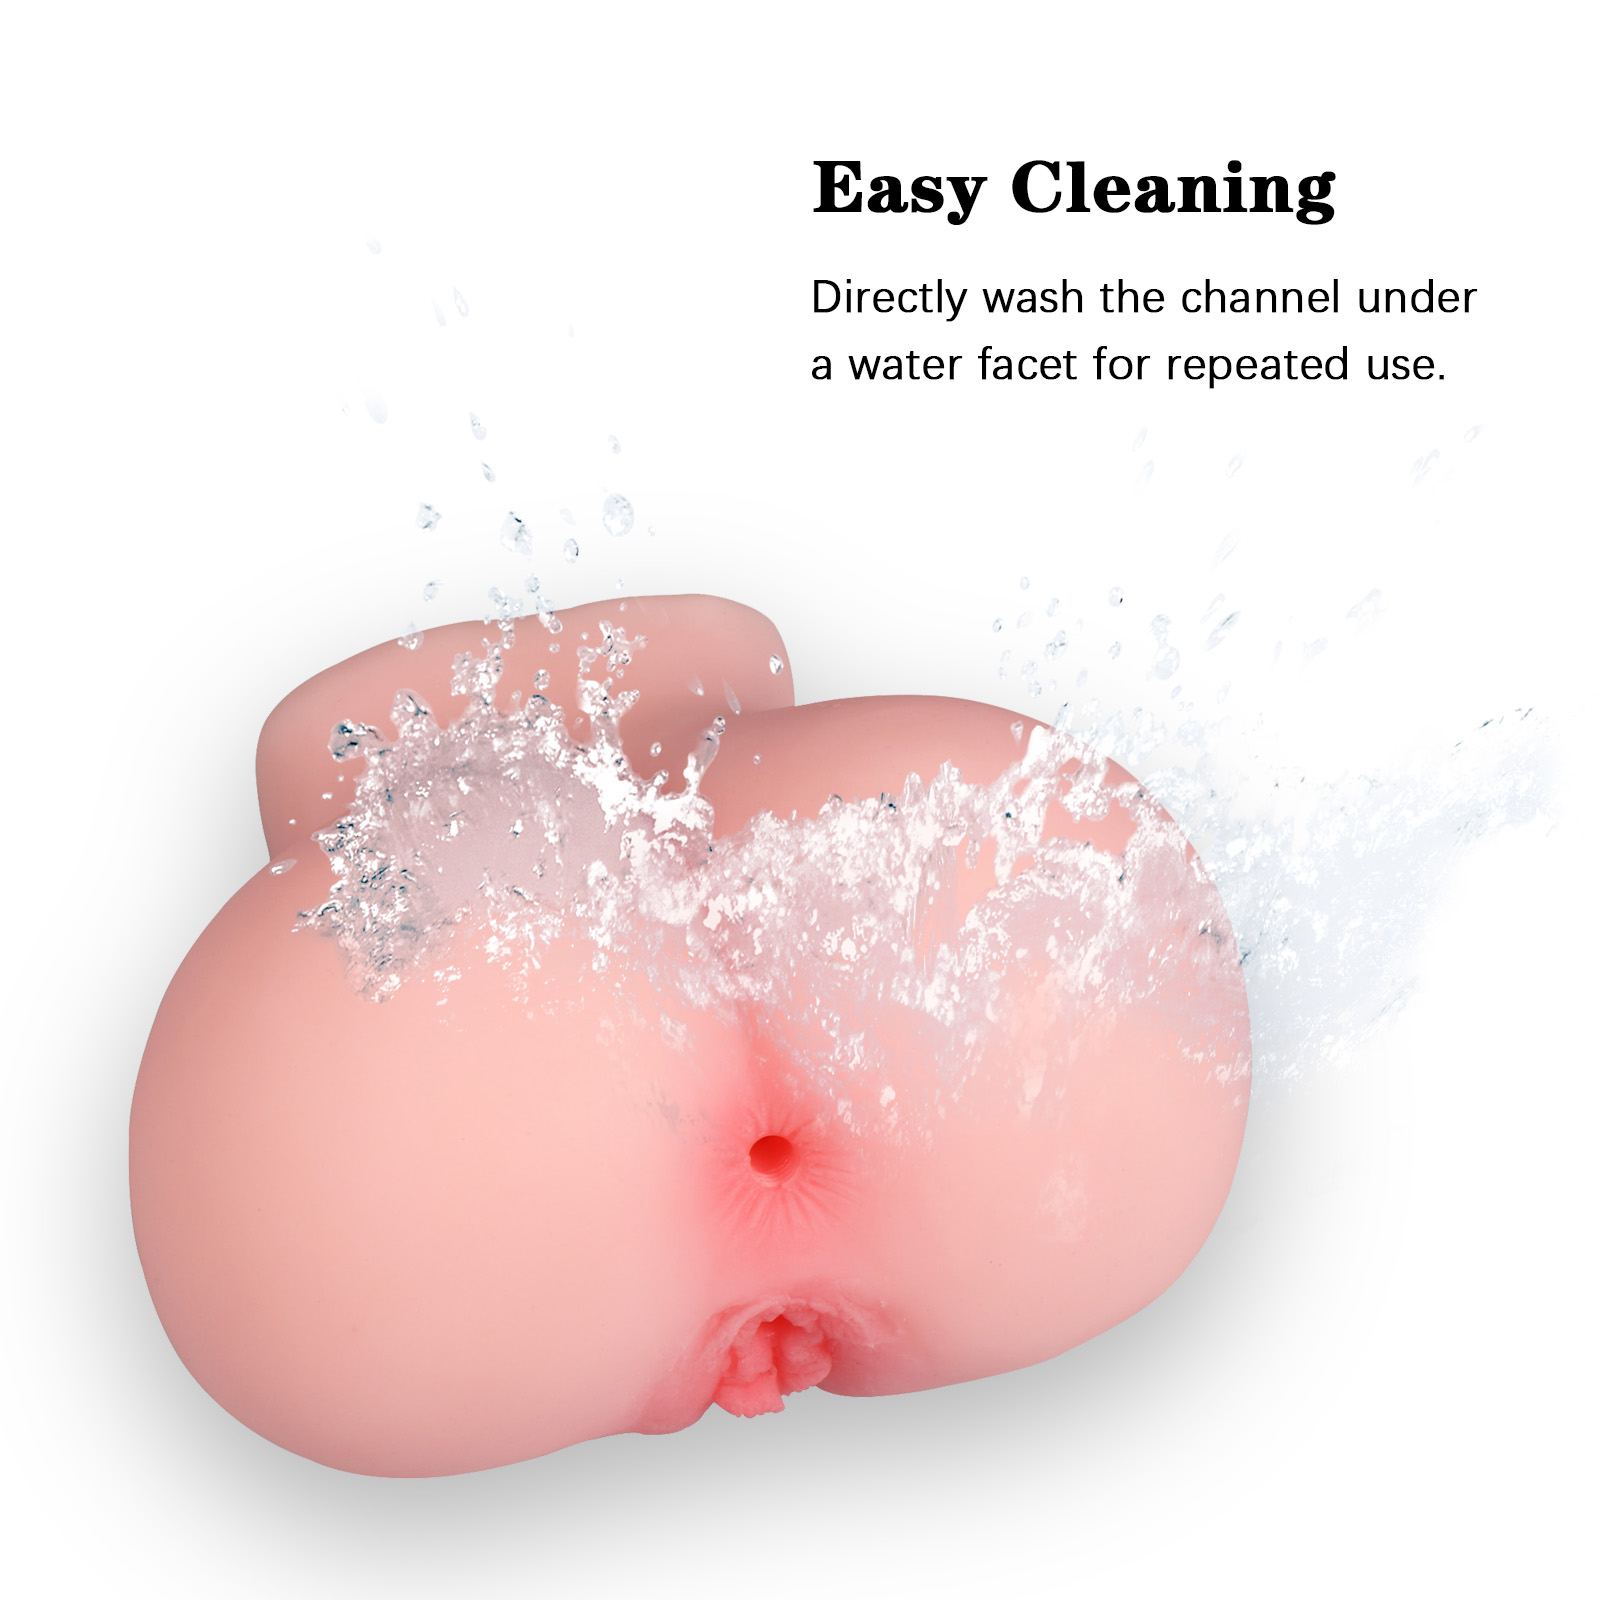 Male Soft Masturbator 3D Realistic Hole Vagina Sex Toys 